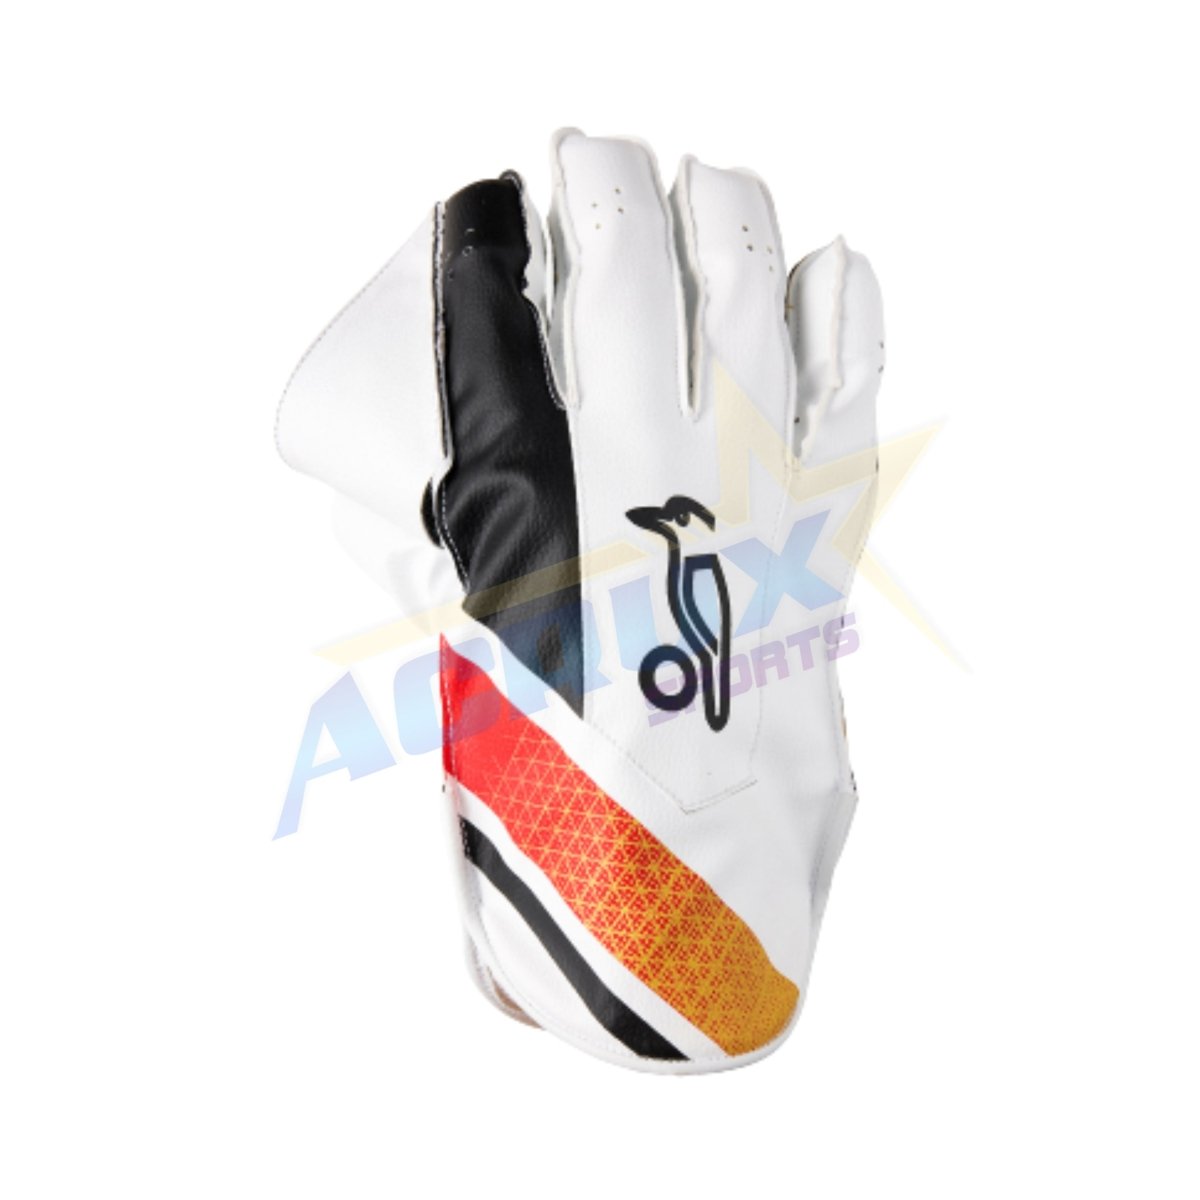 Kookaburra Beast Pro 3.0 Cricket Wicket Keeping Gloves - Acrux Sports